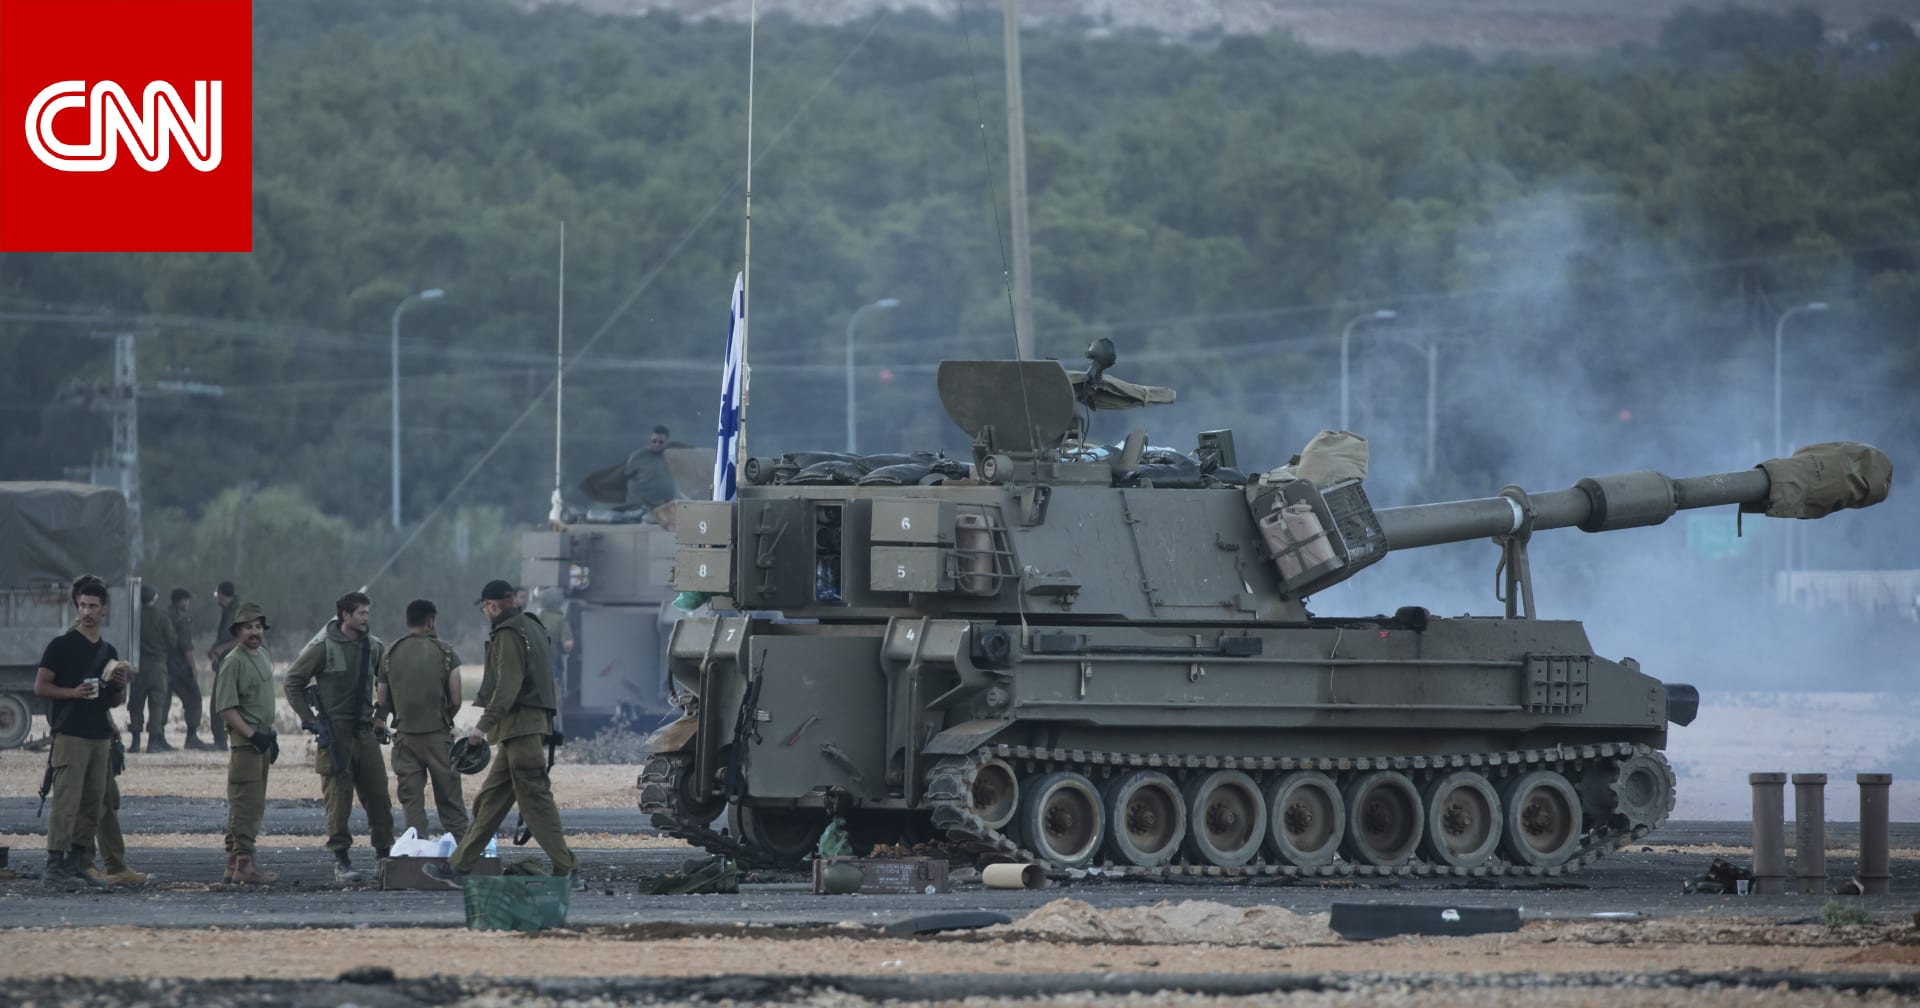 إسرائيل تصدر بيانا عقب إعلان لبنان مقتل جندي "جراء قصف إسرائيلي"